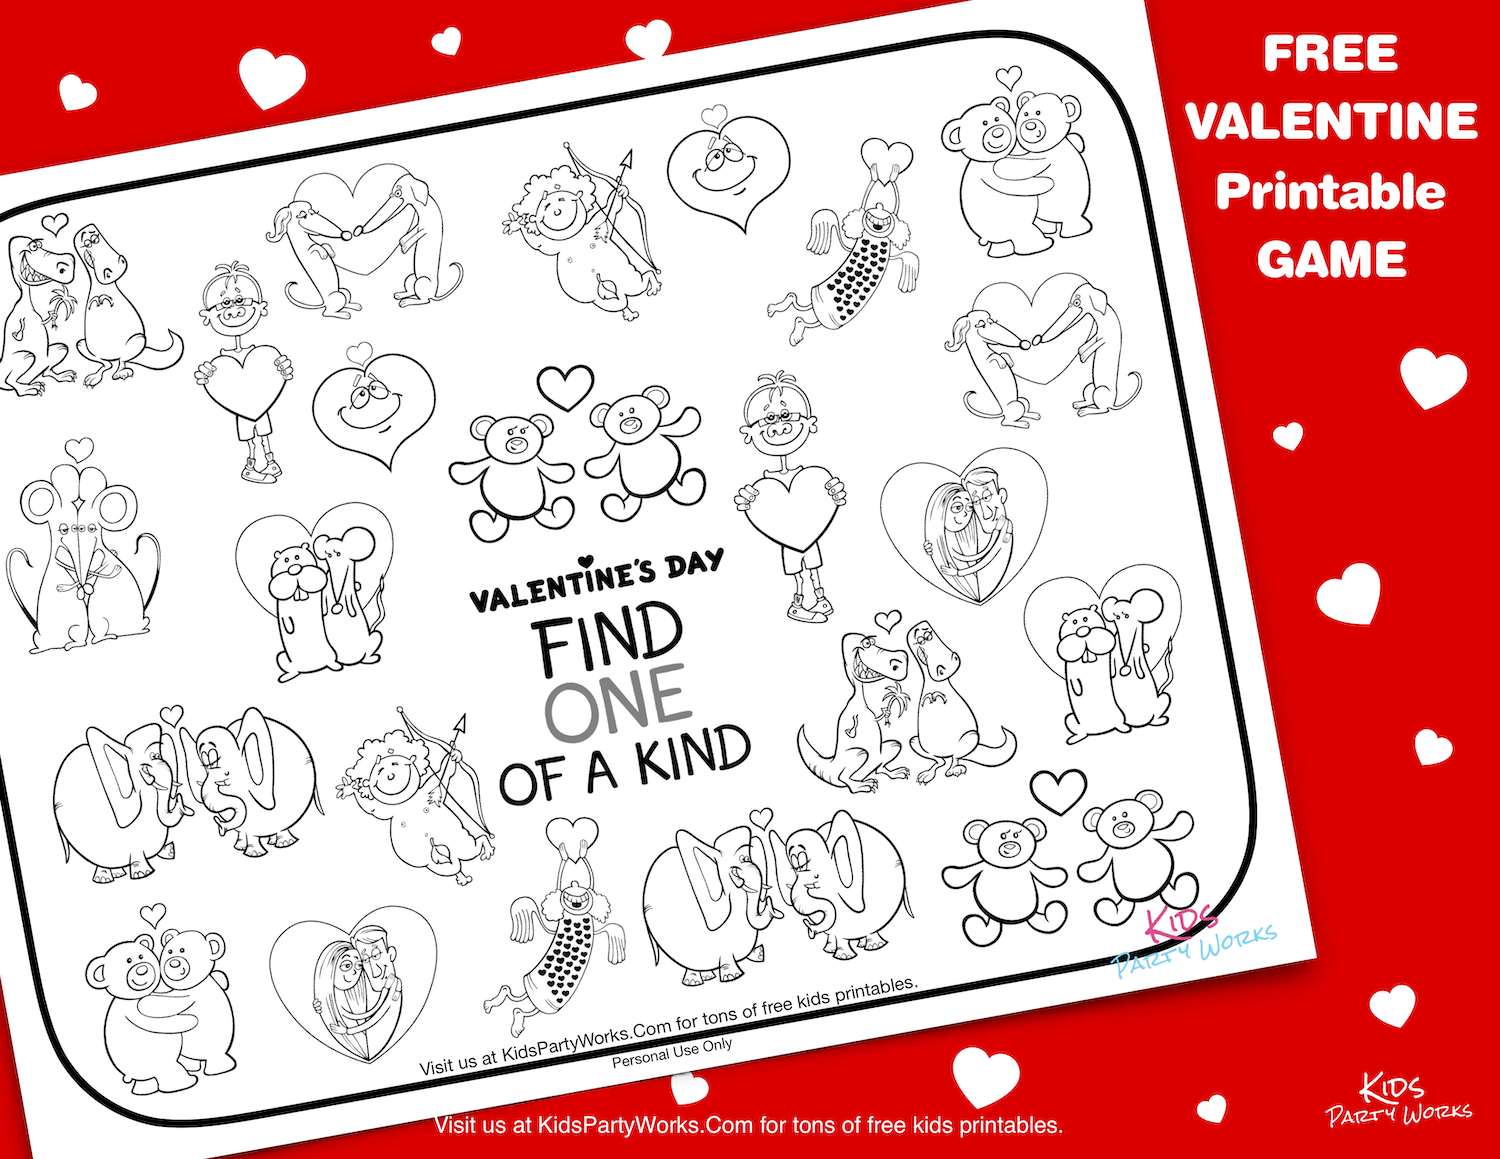 Free Valentine Printable Game. KidsPartyWorks.Com